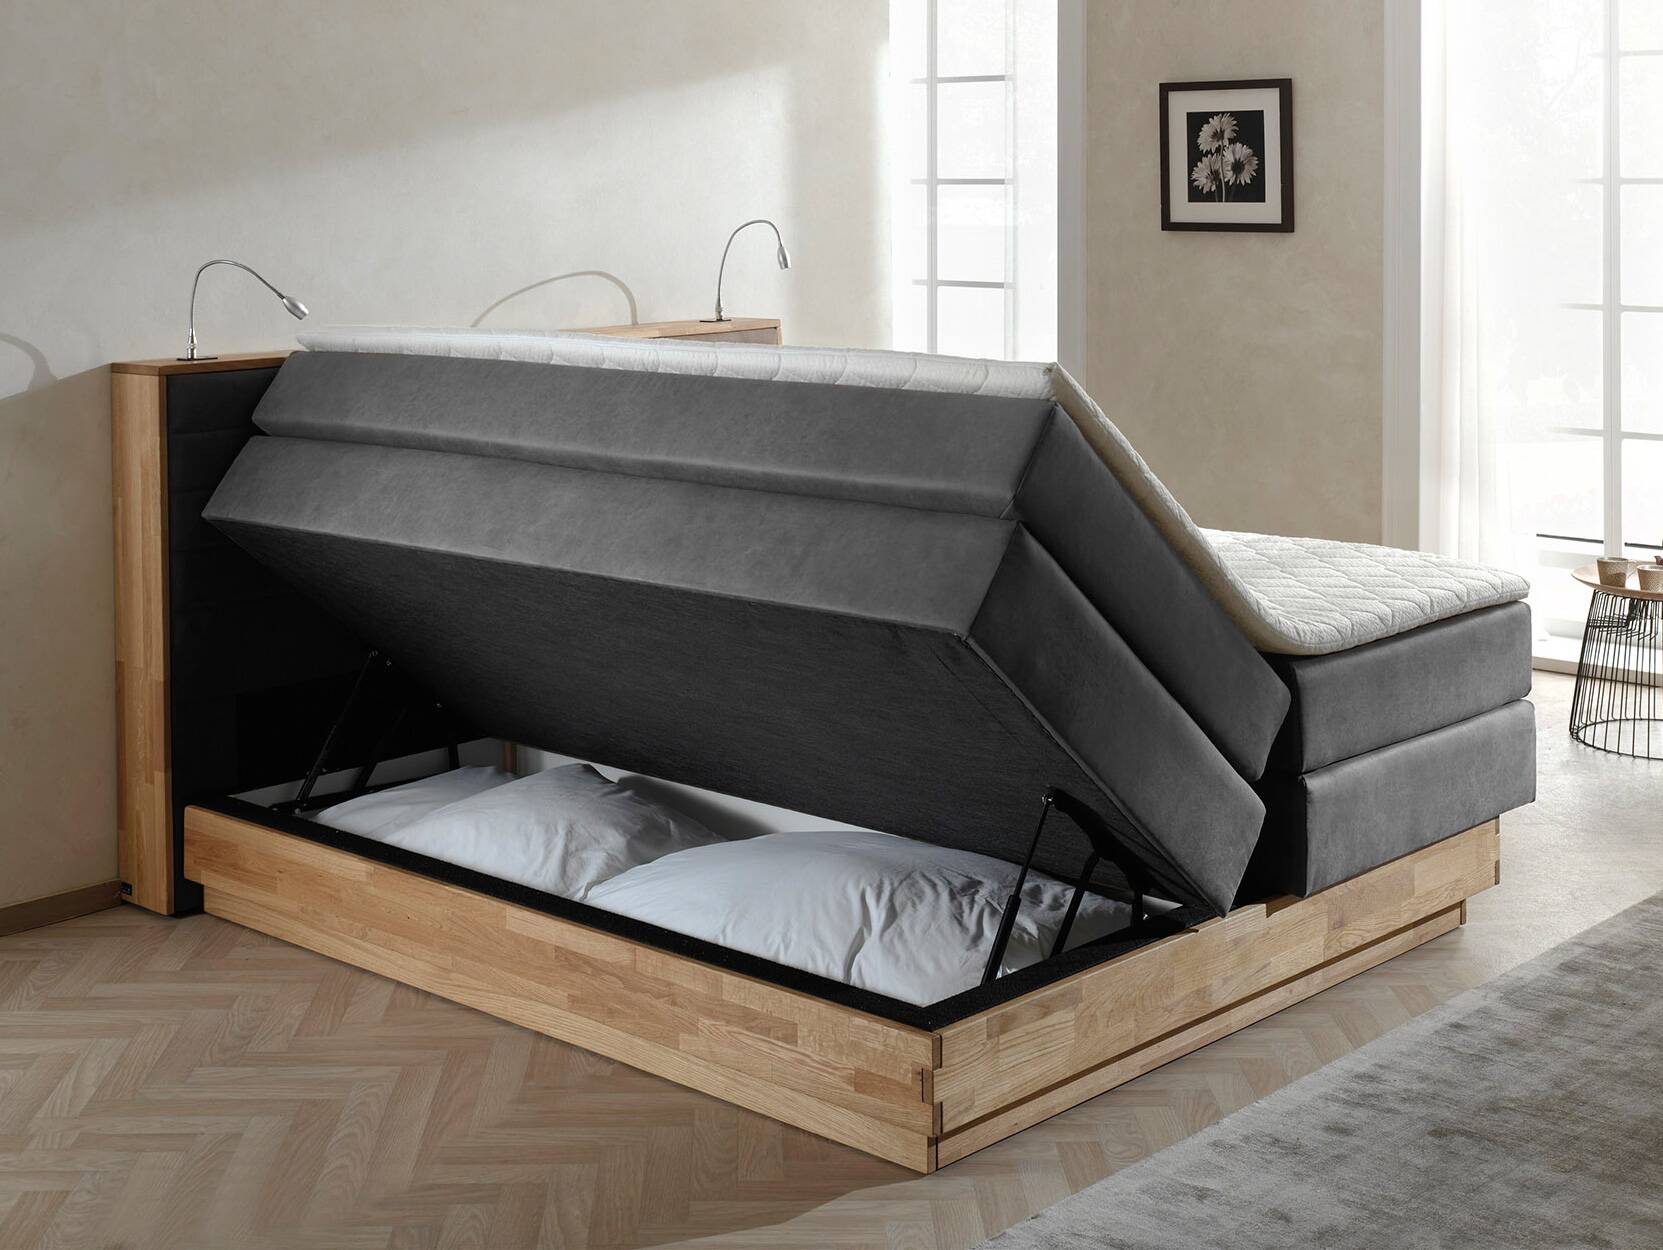 MENOTA Boxspringbett mit Bettkasten, massivem Holzrahmen und Bezug im Vintage Look 160 x 200 cm | grau | Härtegrad 2